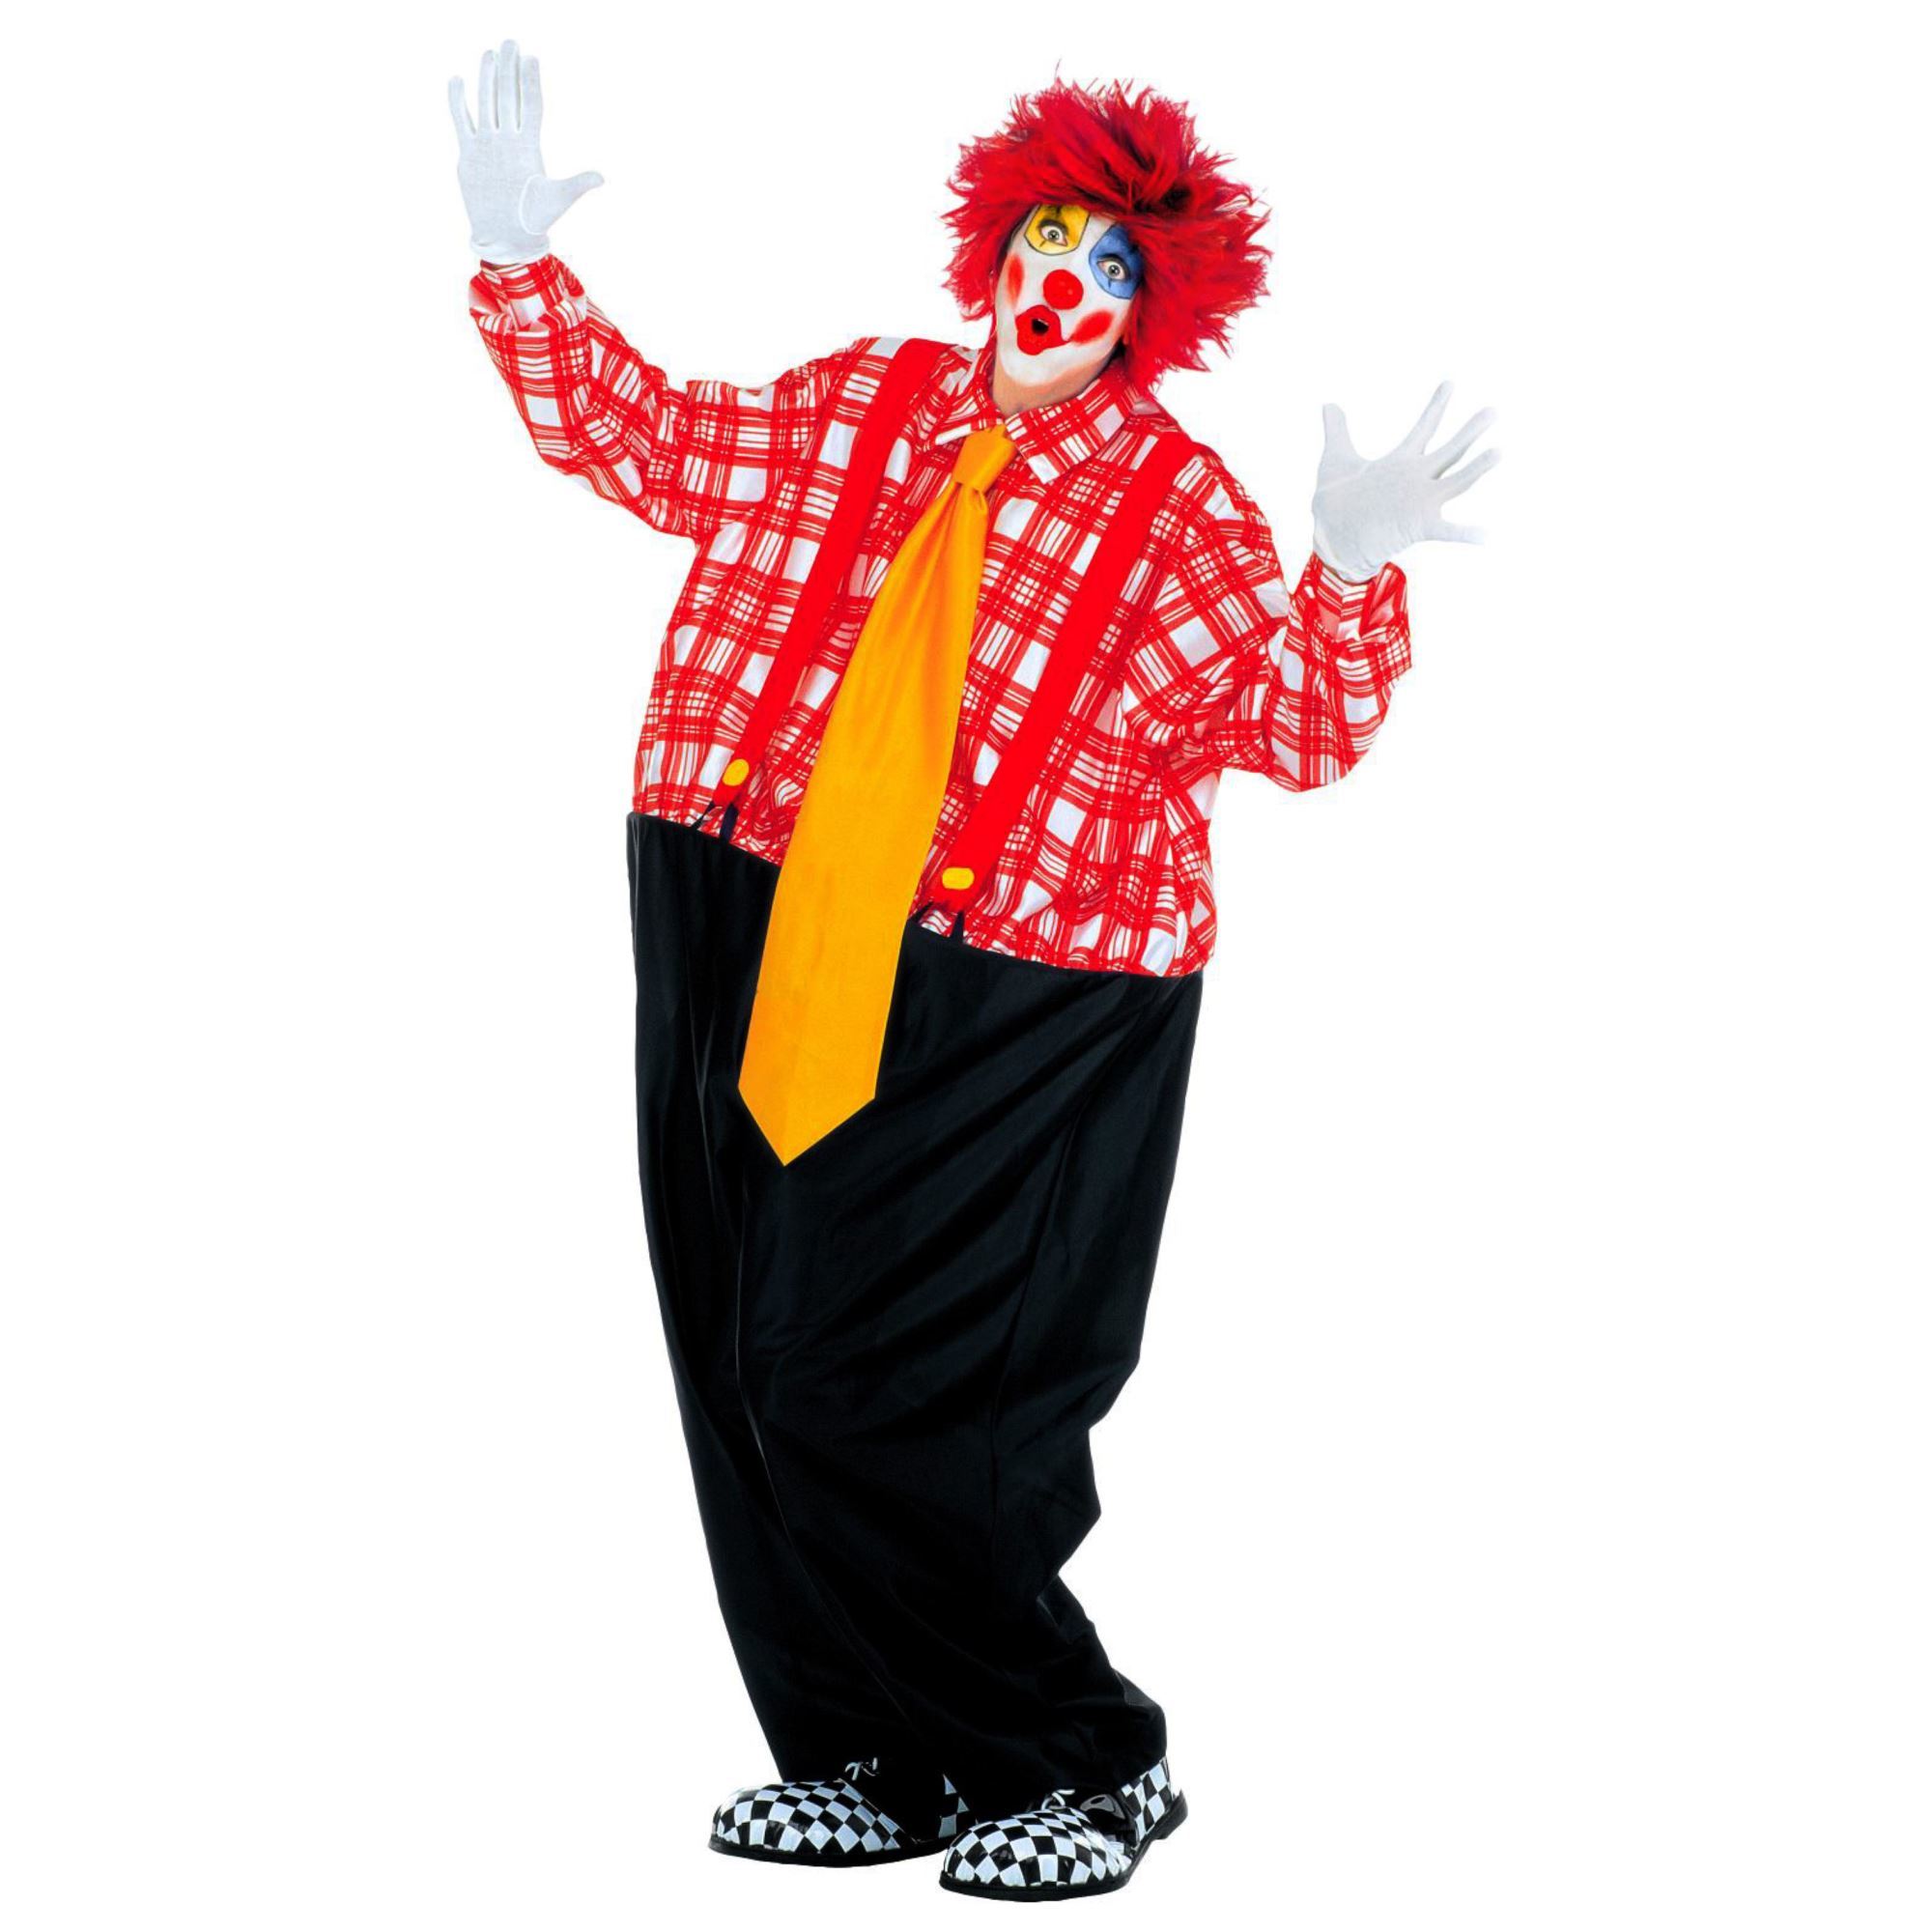 dikmaak kostuum clown obese clown